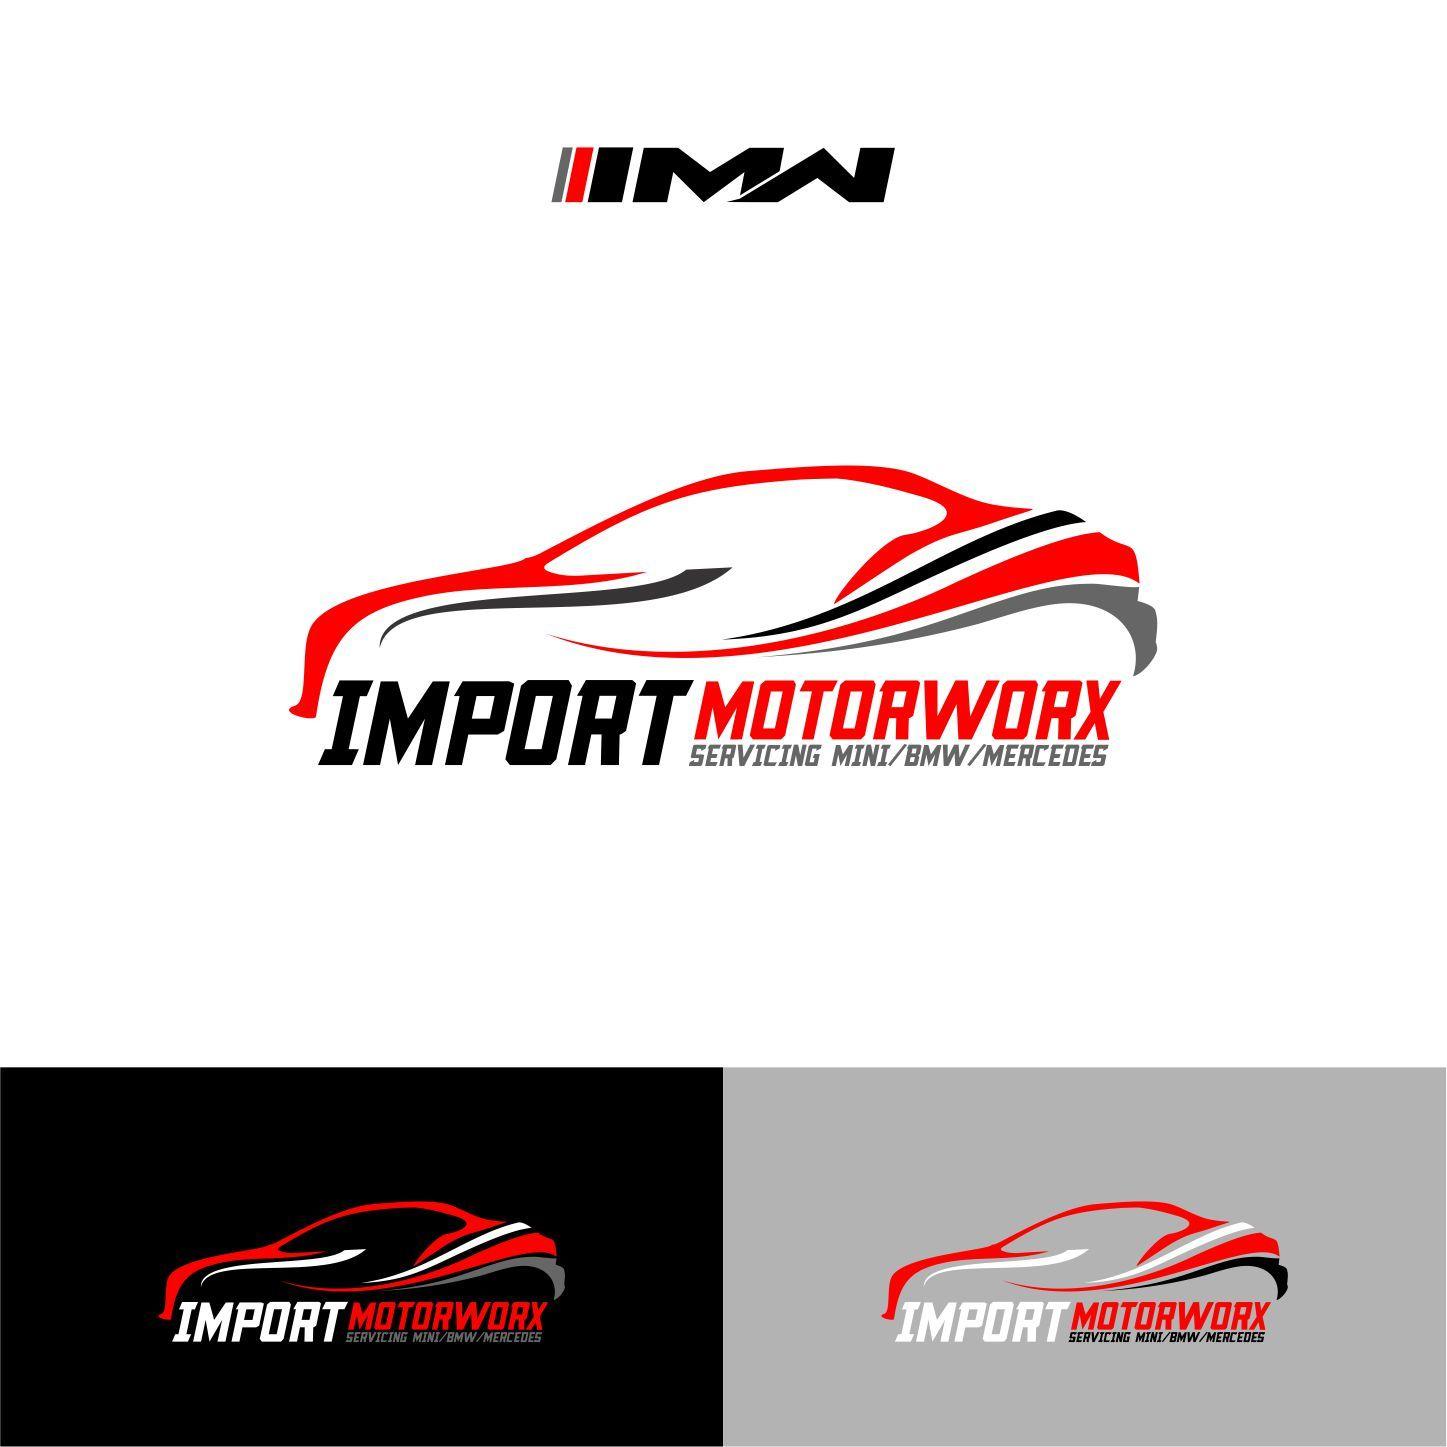 Automotive Import Logo - Upmarket, Modern, Automotive Logo Design for Import MotorWorx